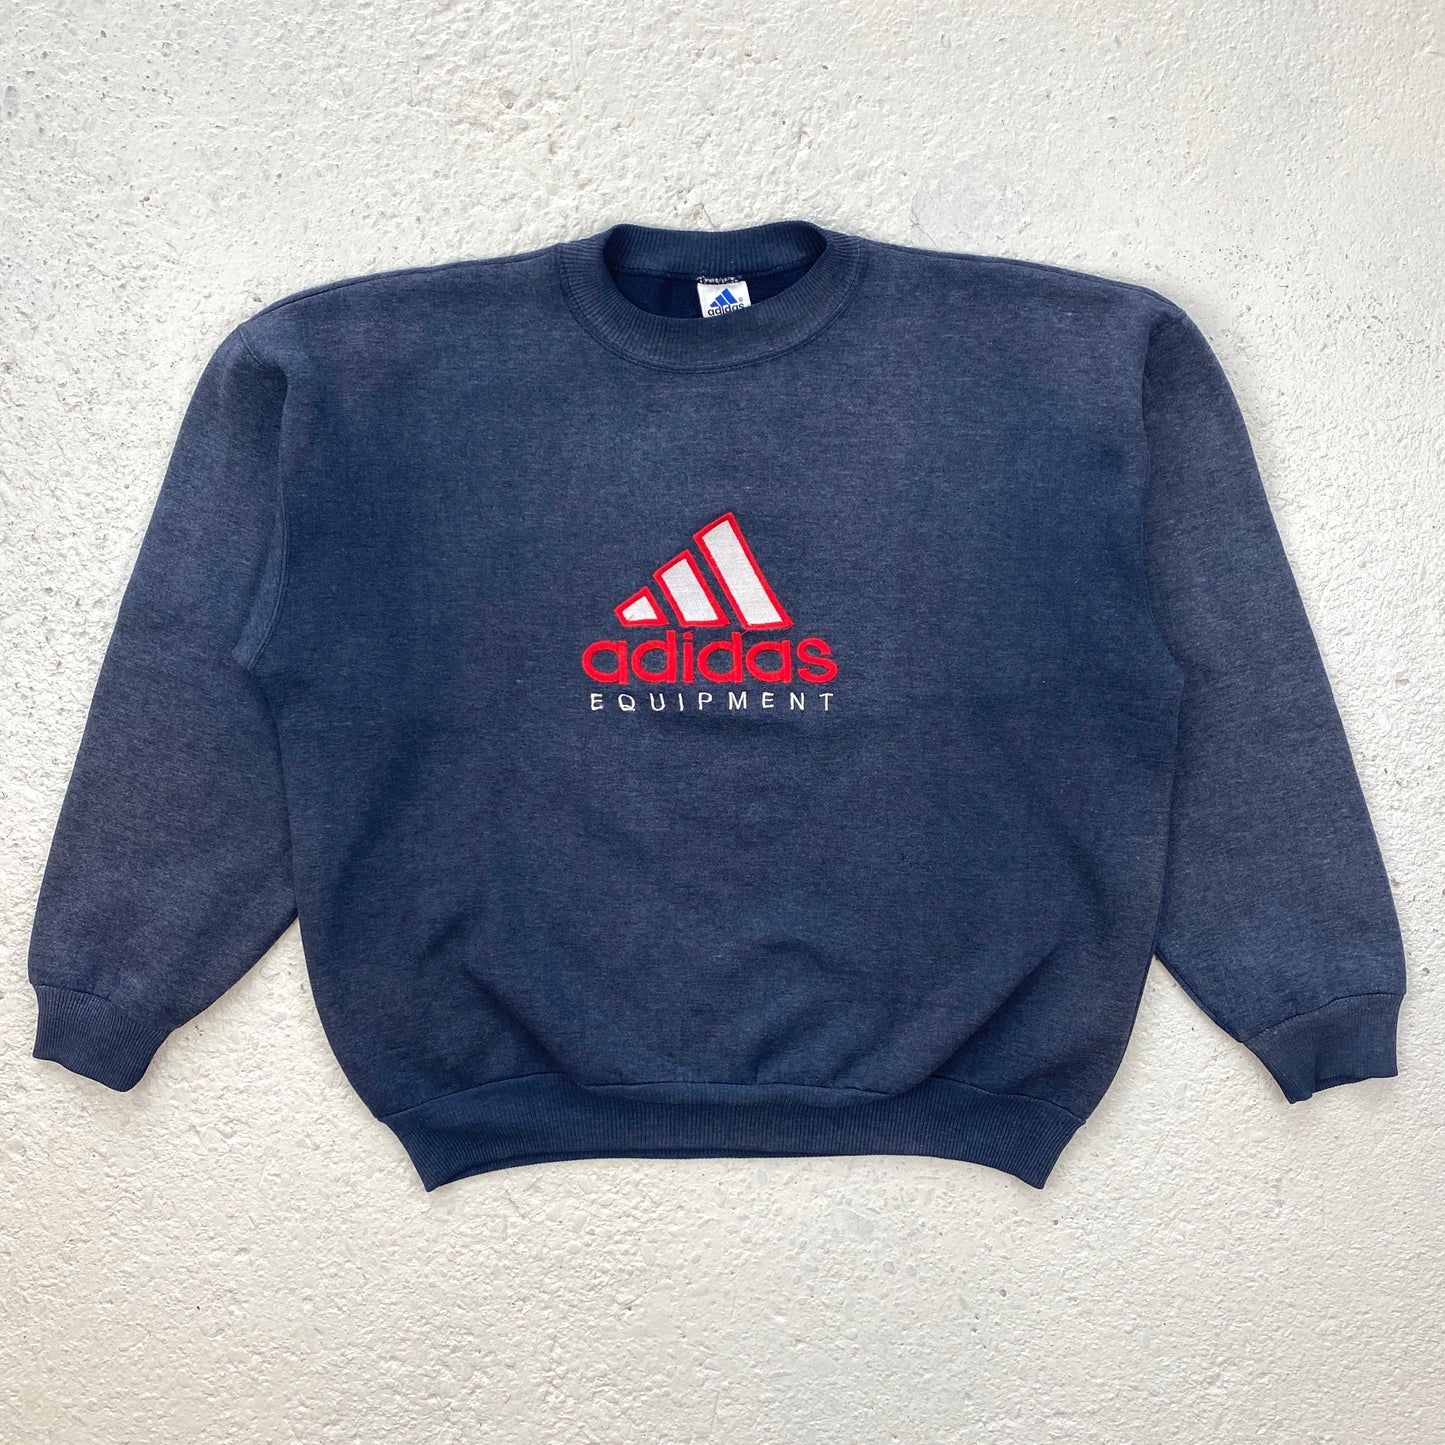 Adidas Equipment RARE sweater (S)